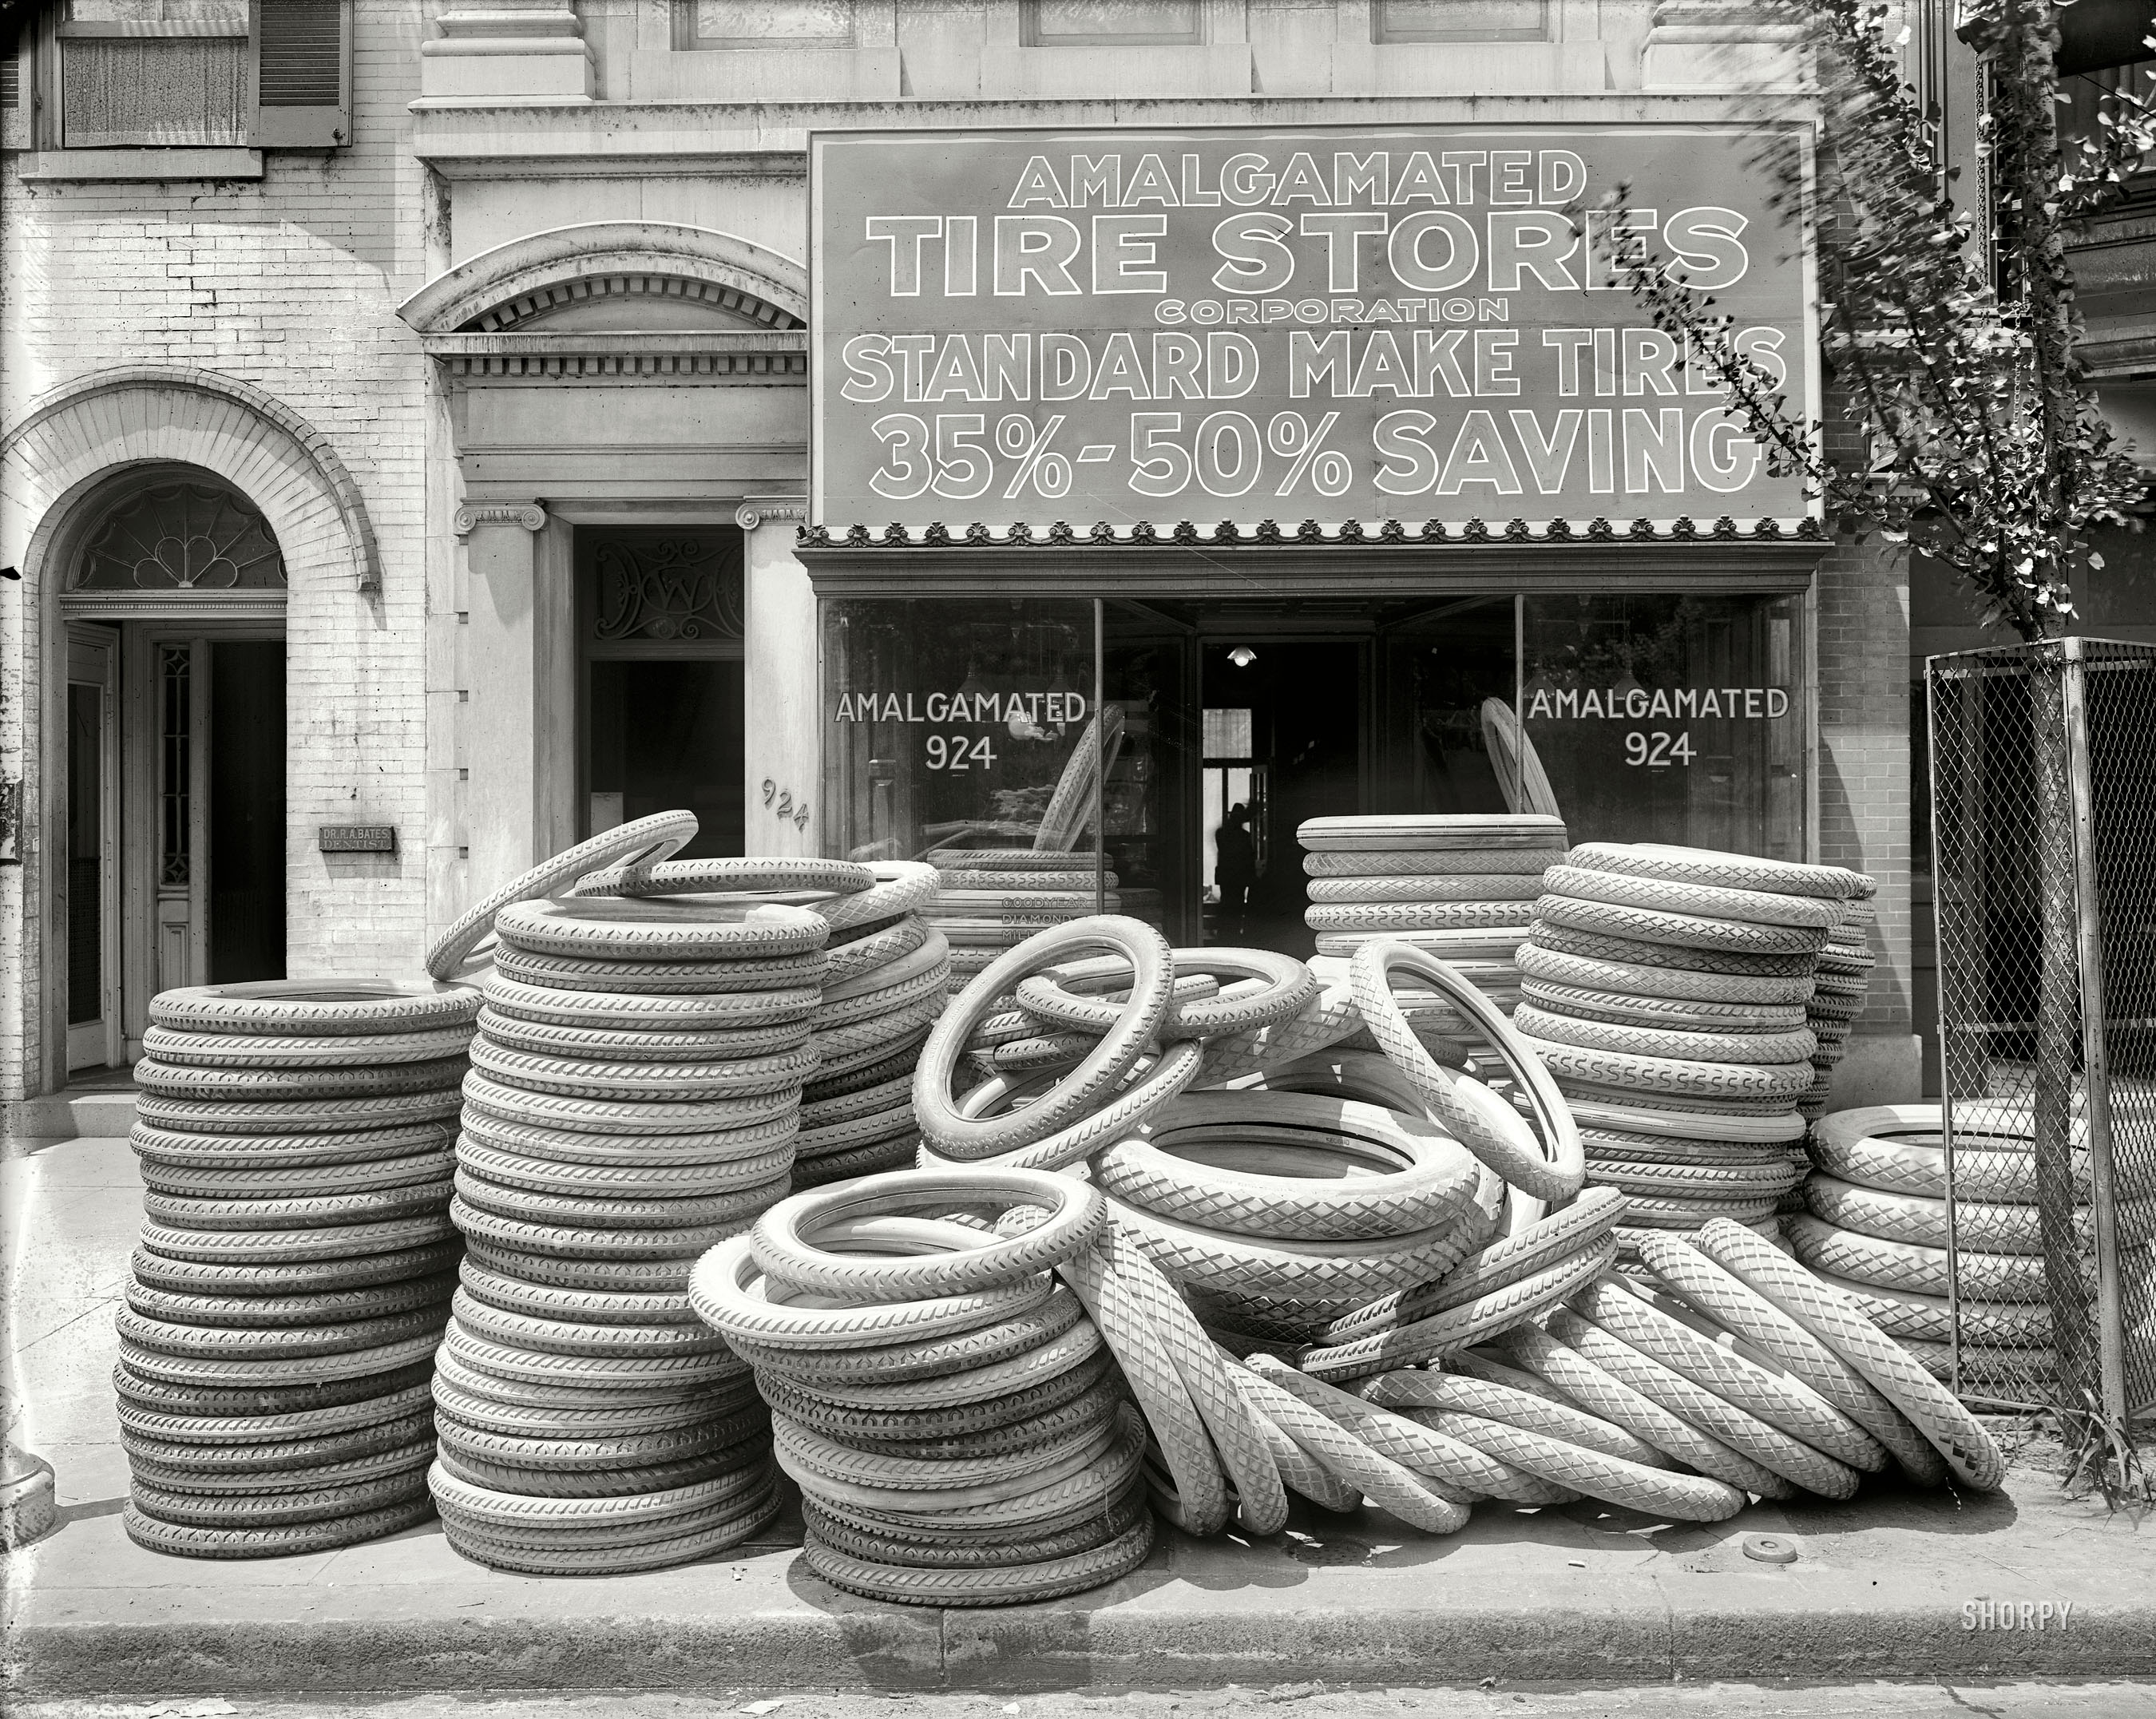 Washington, D.C., circa 1920. "Amalgamated Tire stores, front." Our second glimpse of this fine establishment. National Photo Co. View full size.